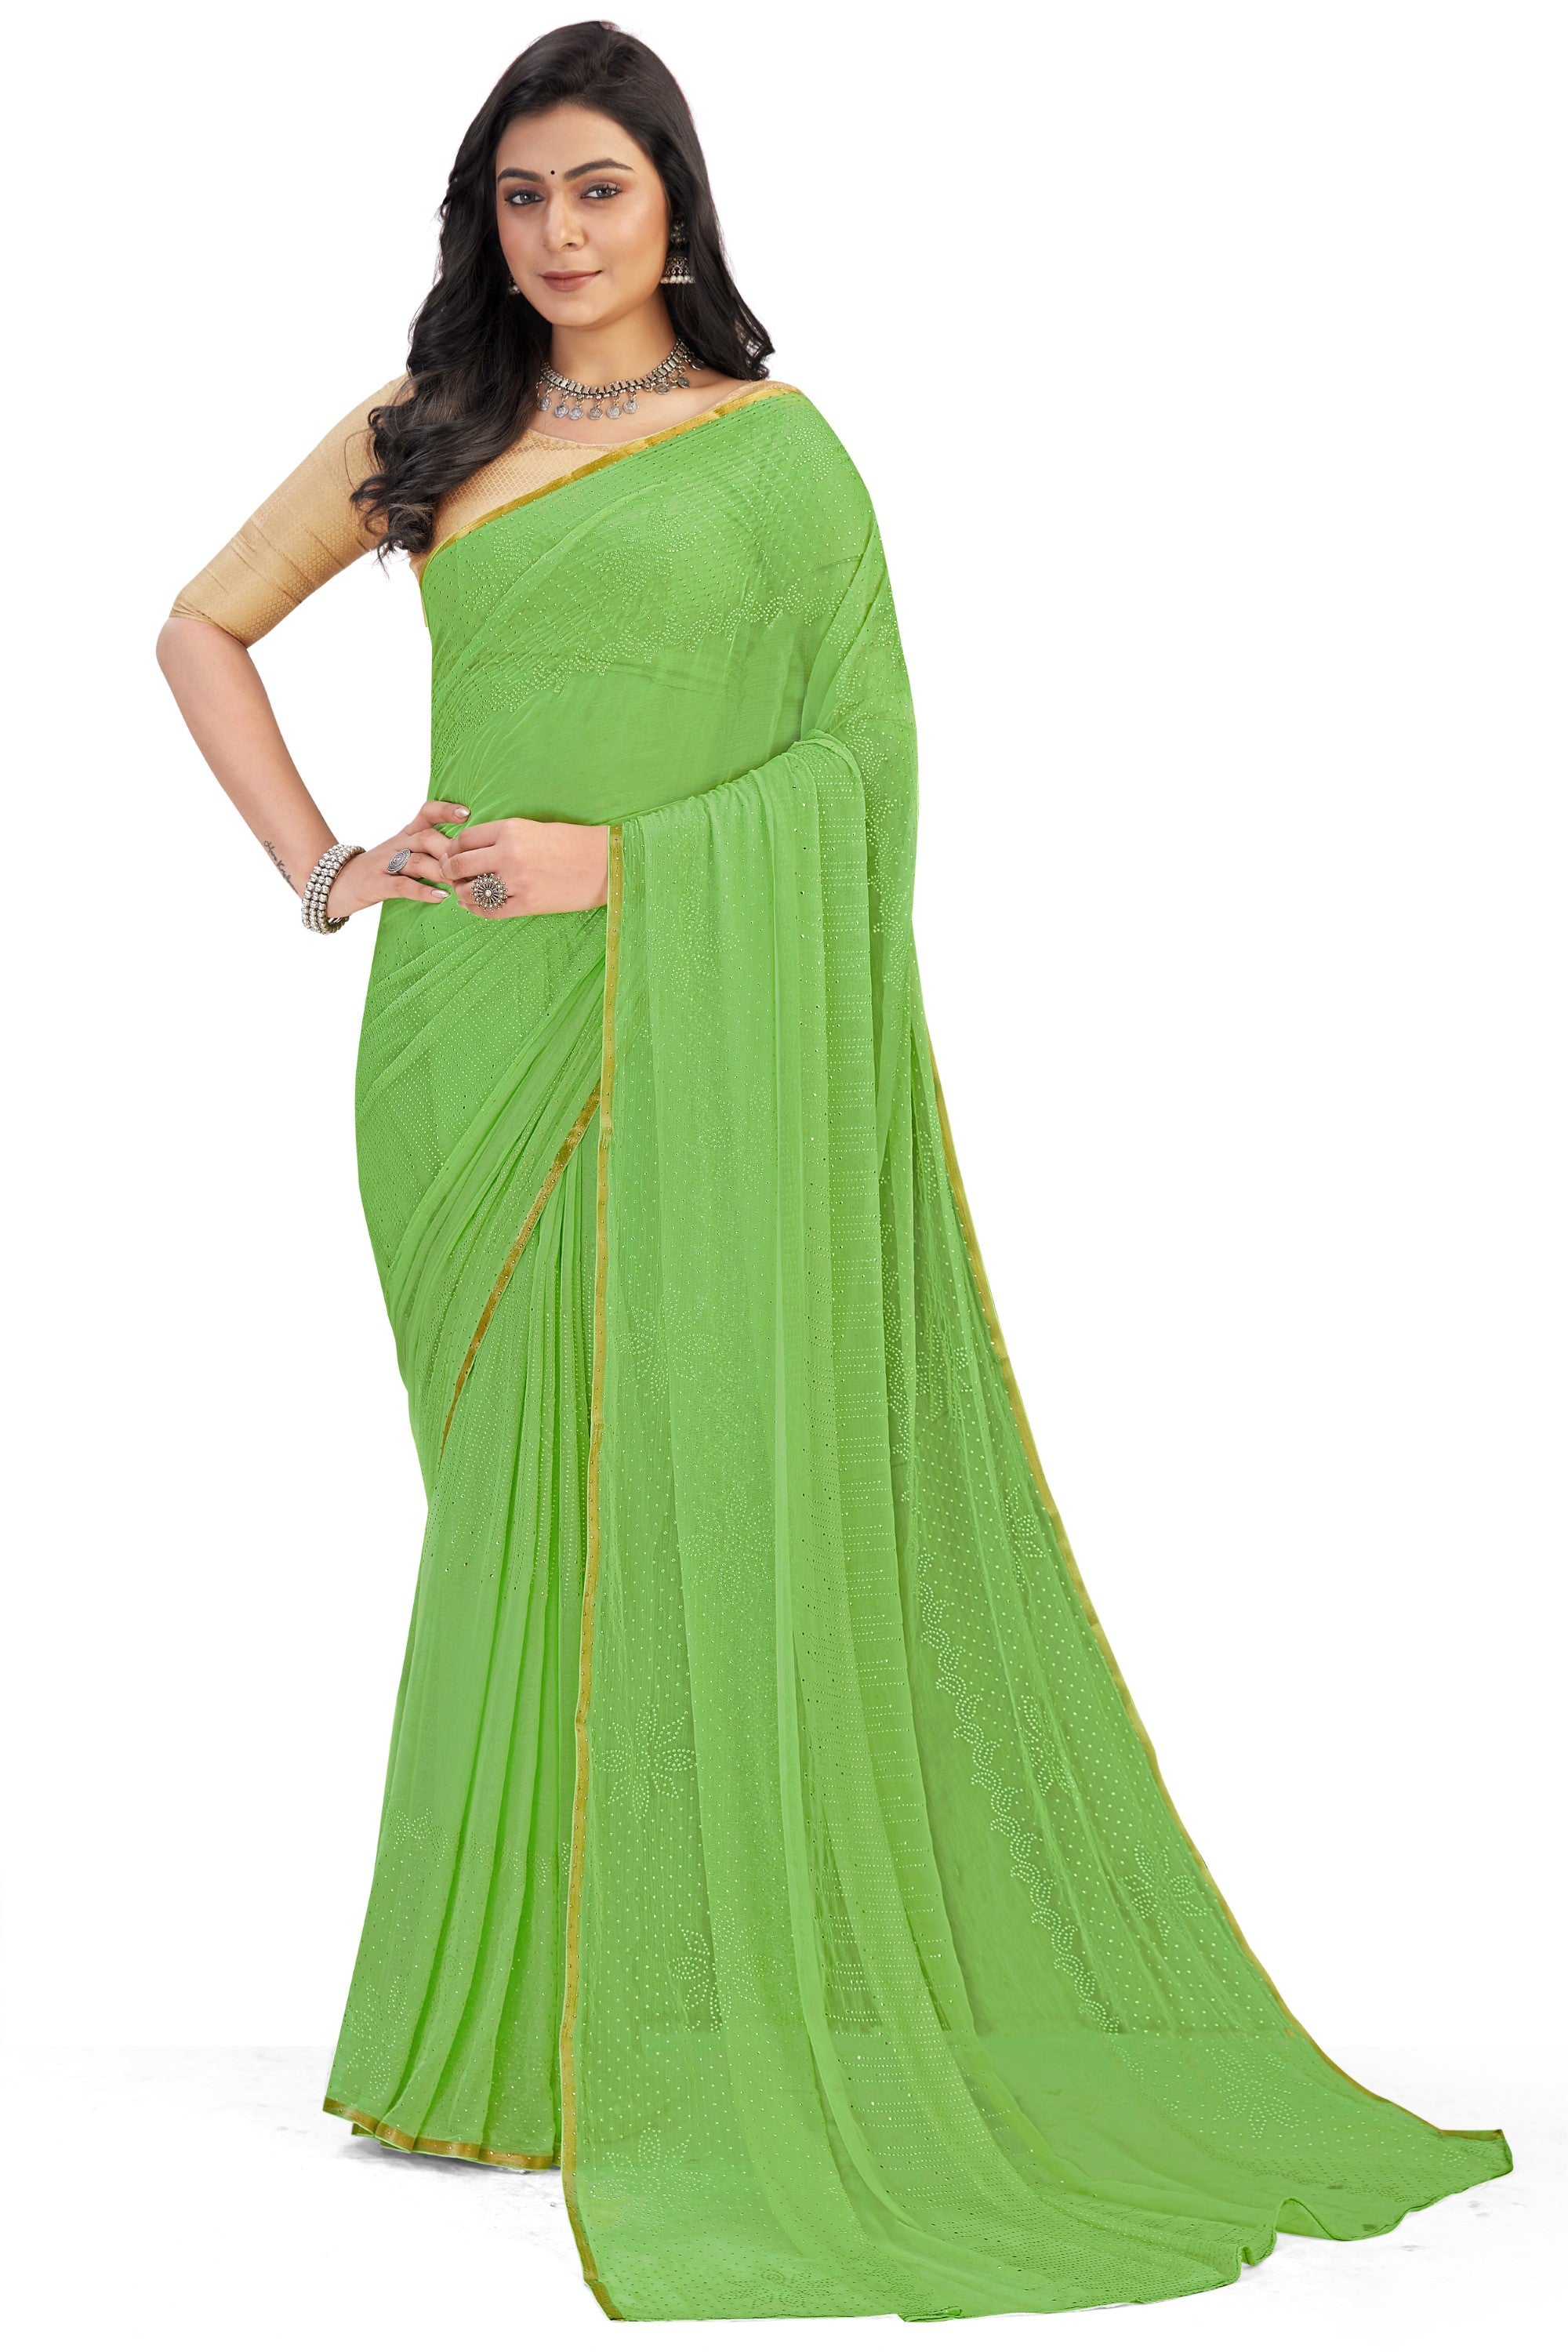 Women's Bandhani Daily Wear Chiffon Sari With Blouse Piece (Parrot Green) - NIMIDHYA